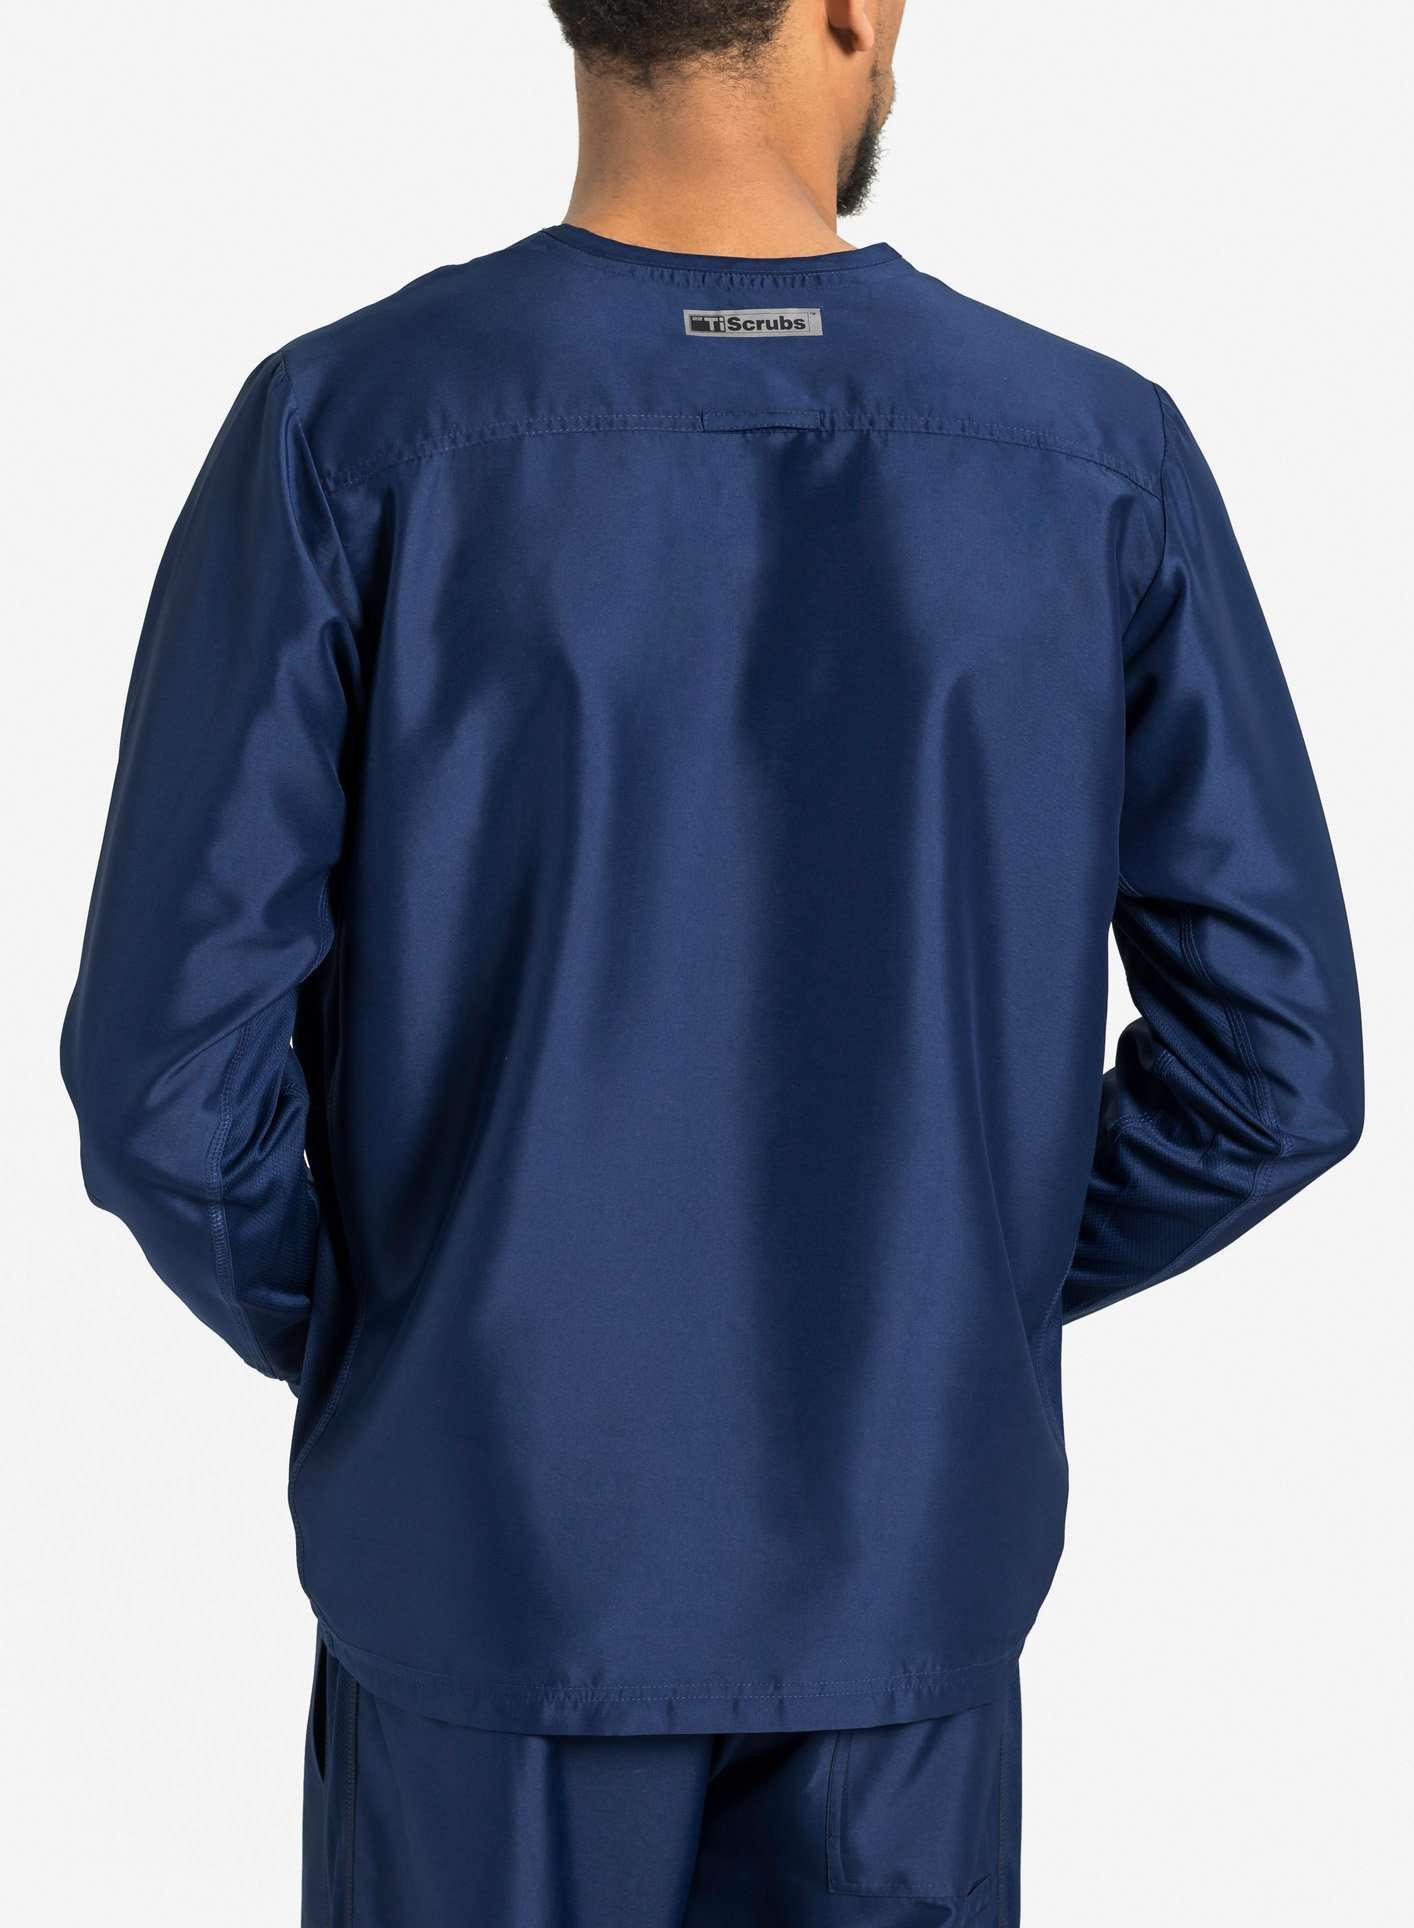 mens Elements long sleeve one pocket scrub top navy-blue